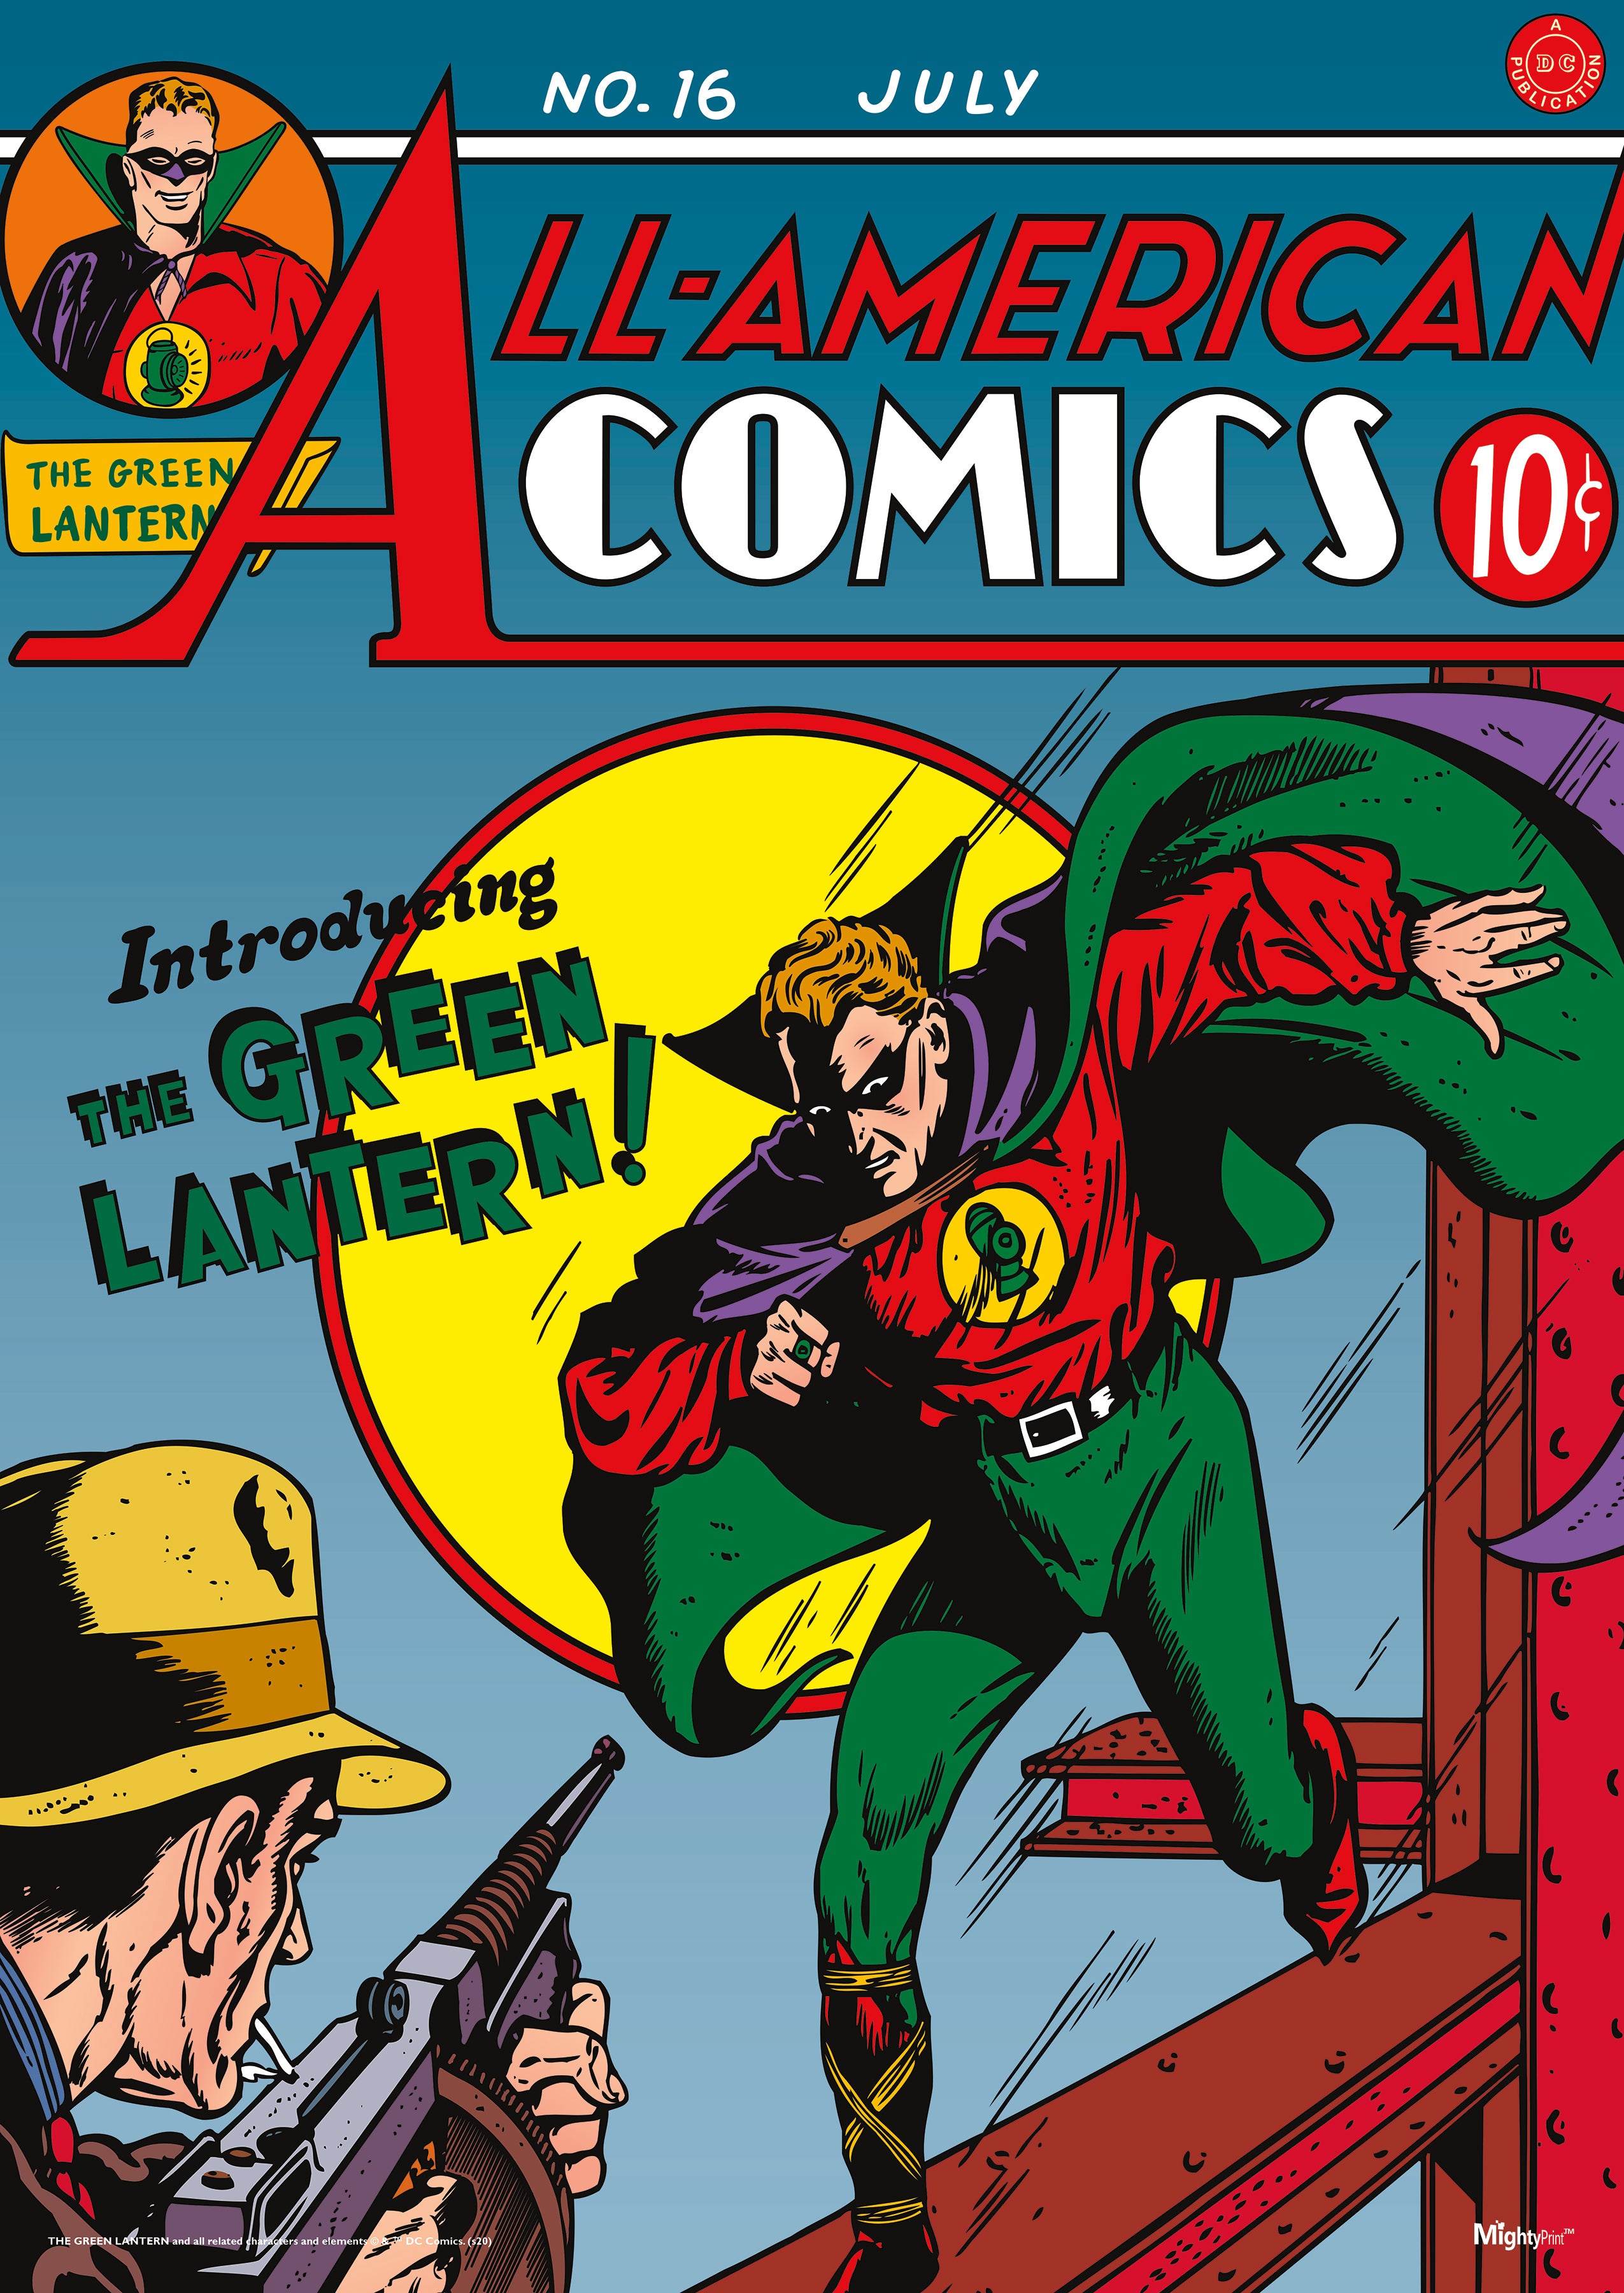 DC Comics (Introducing The Green Lantern) MightyPrint™ Wall Art MP17240572